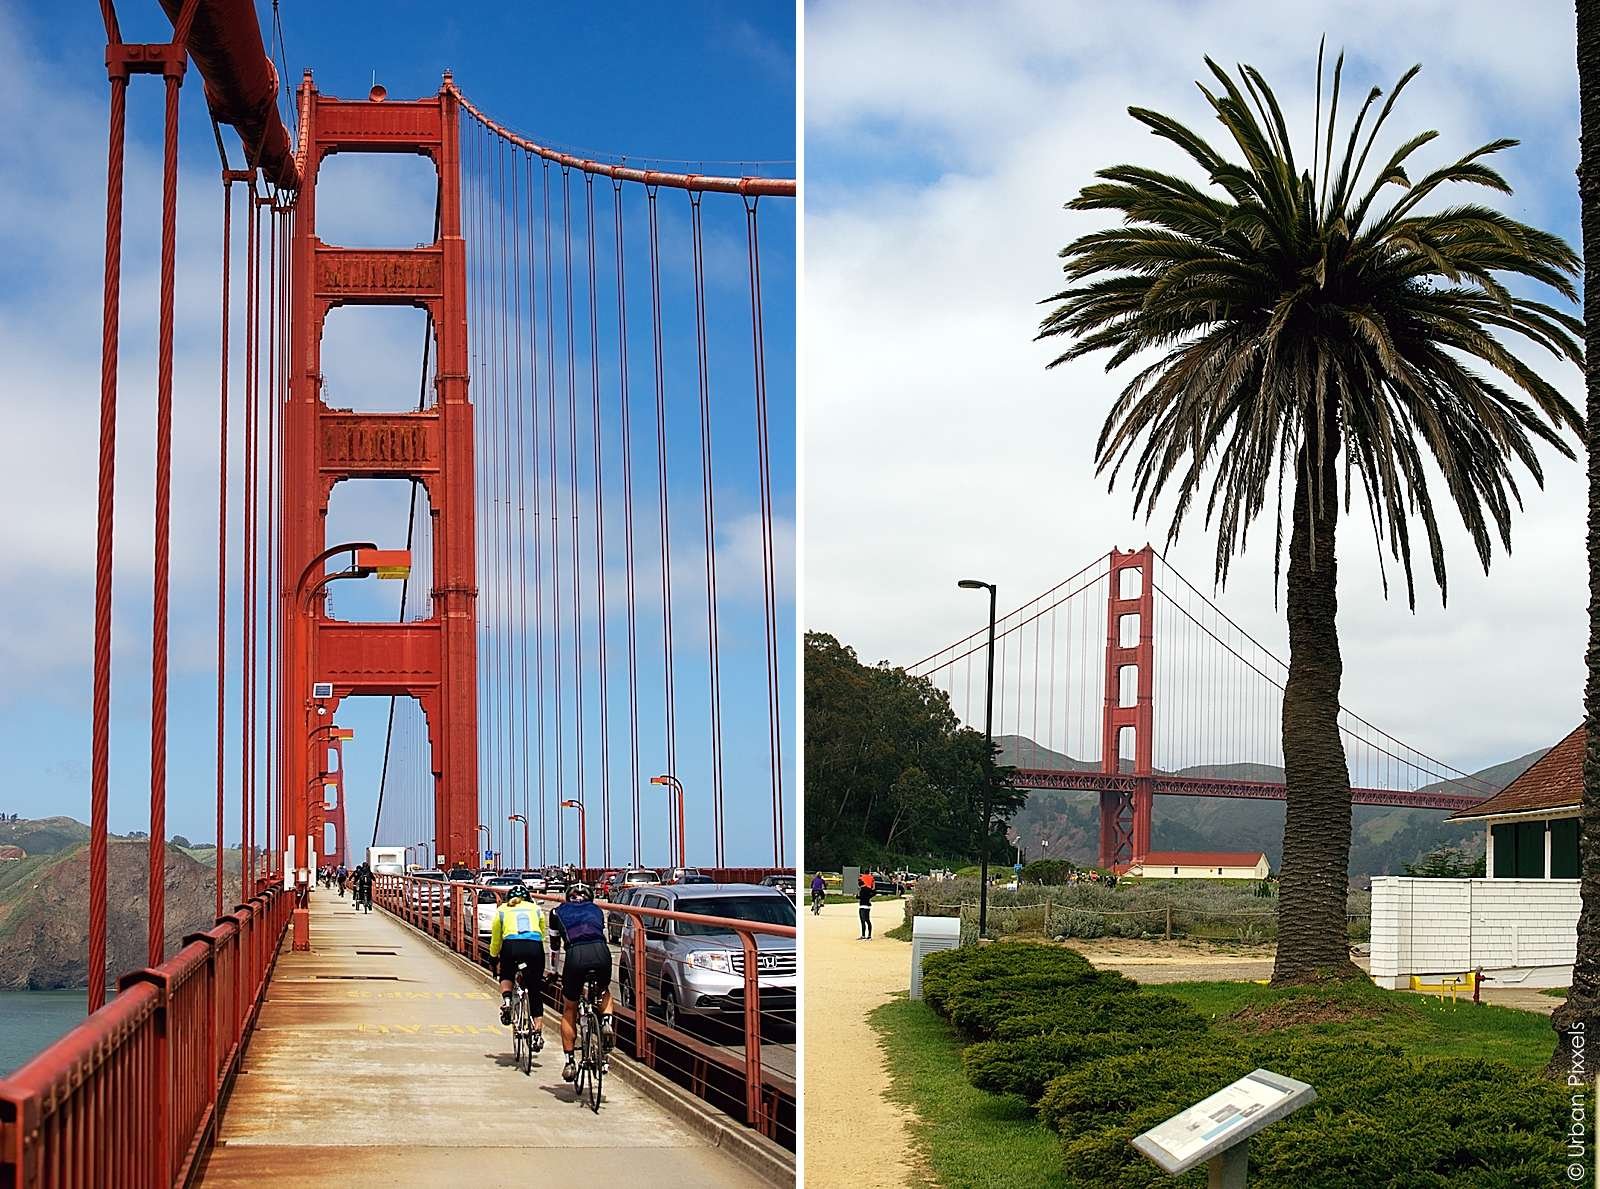 Cycling across the Golden Gate Bridge in San Francisco